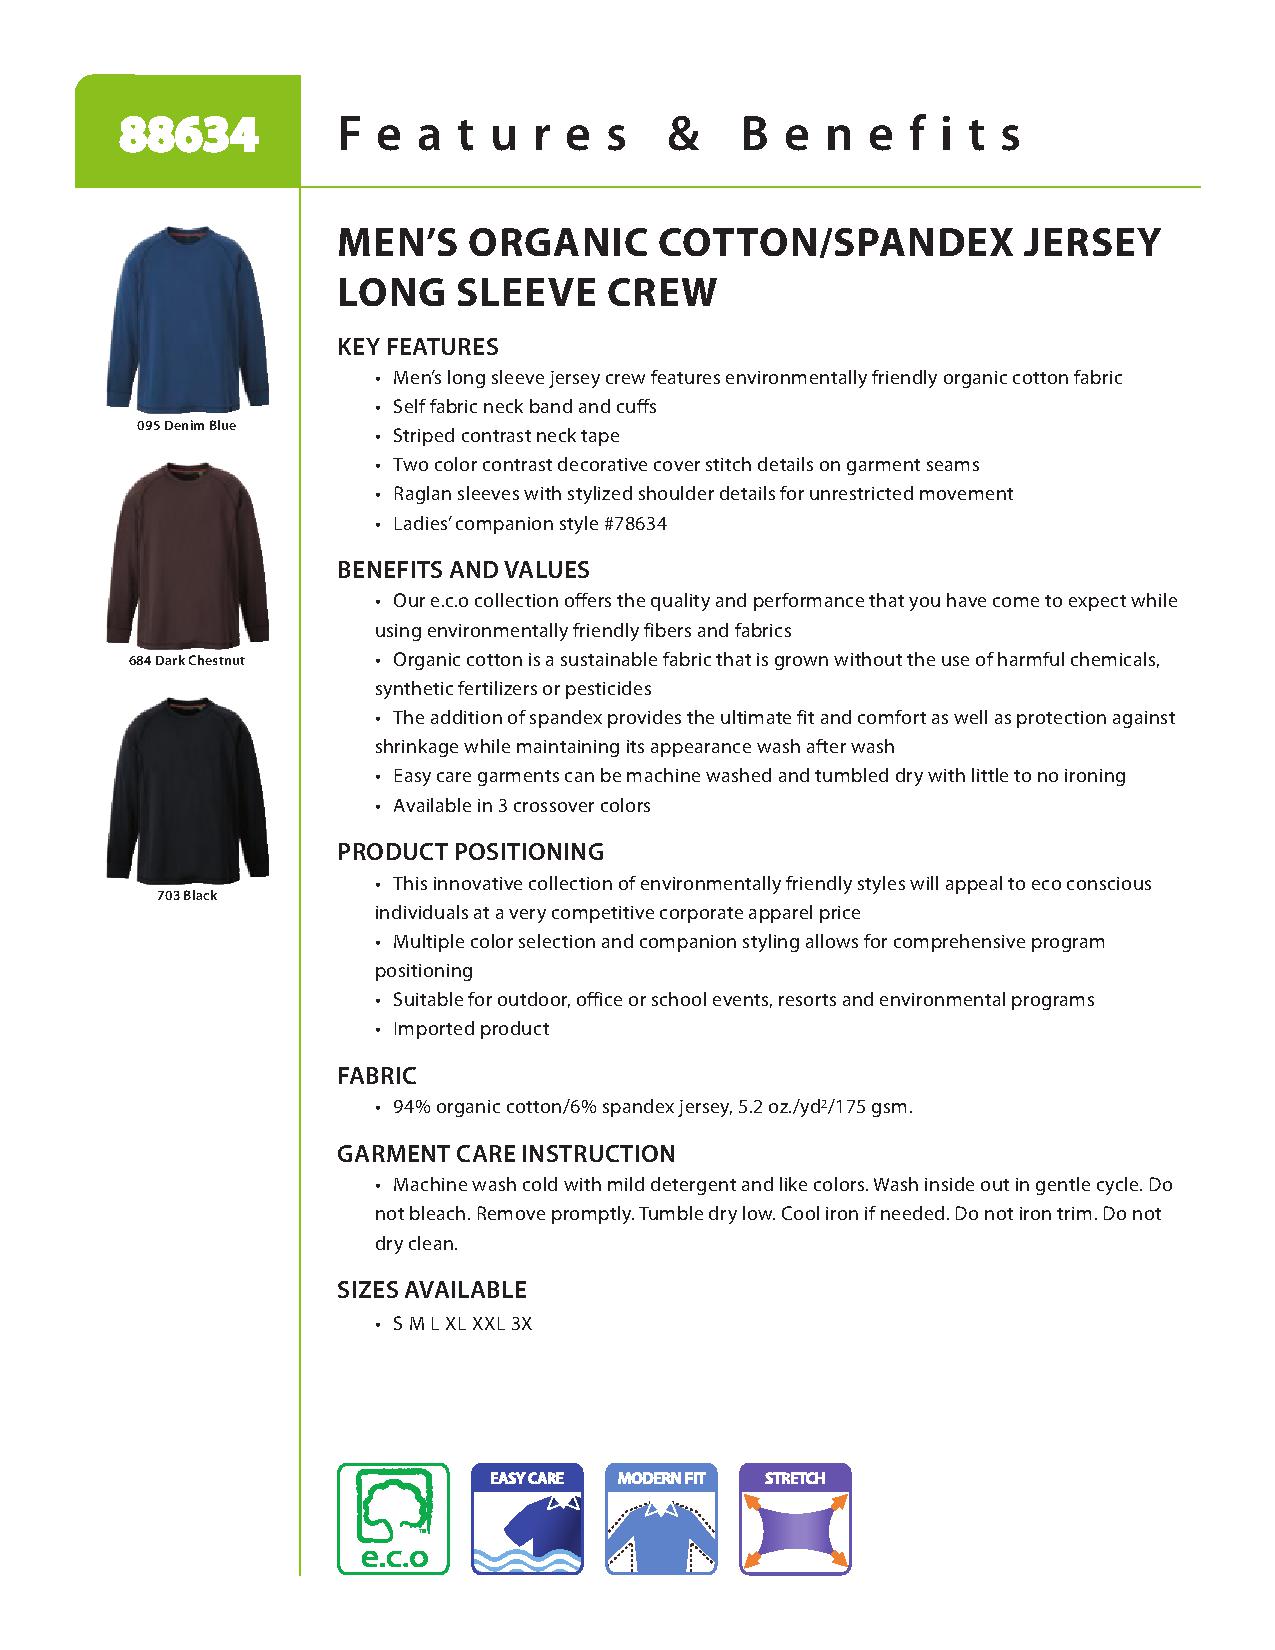 Ash City e.c.o Knits 88634 - Men's Organice Cotton/Spanddex Jersey Polo Lone Sleeve Crew